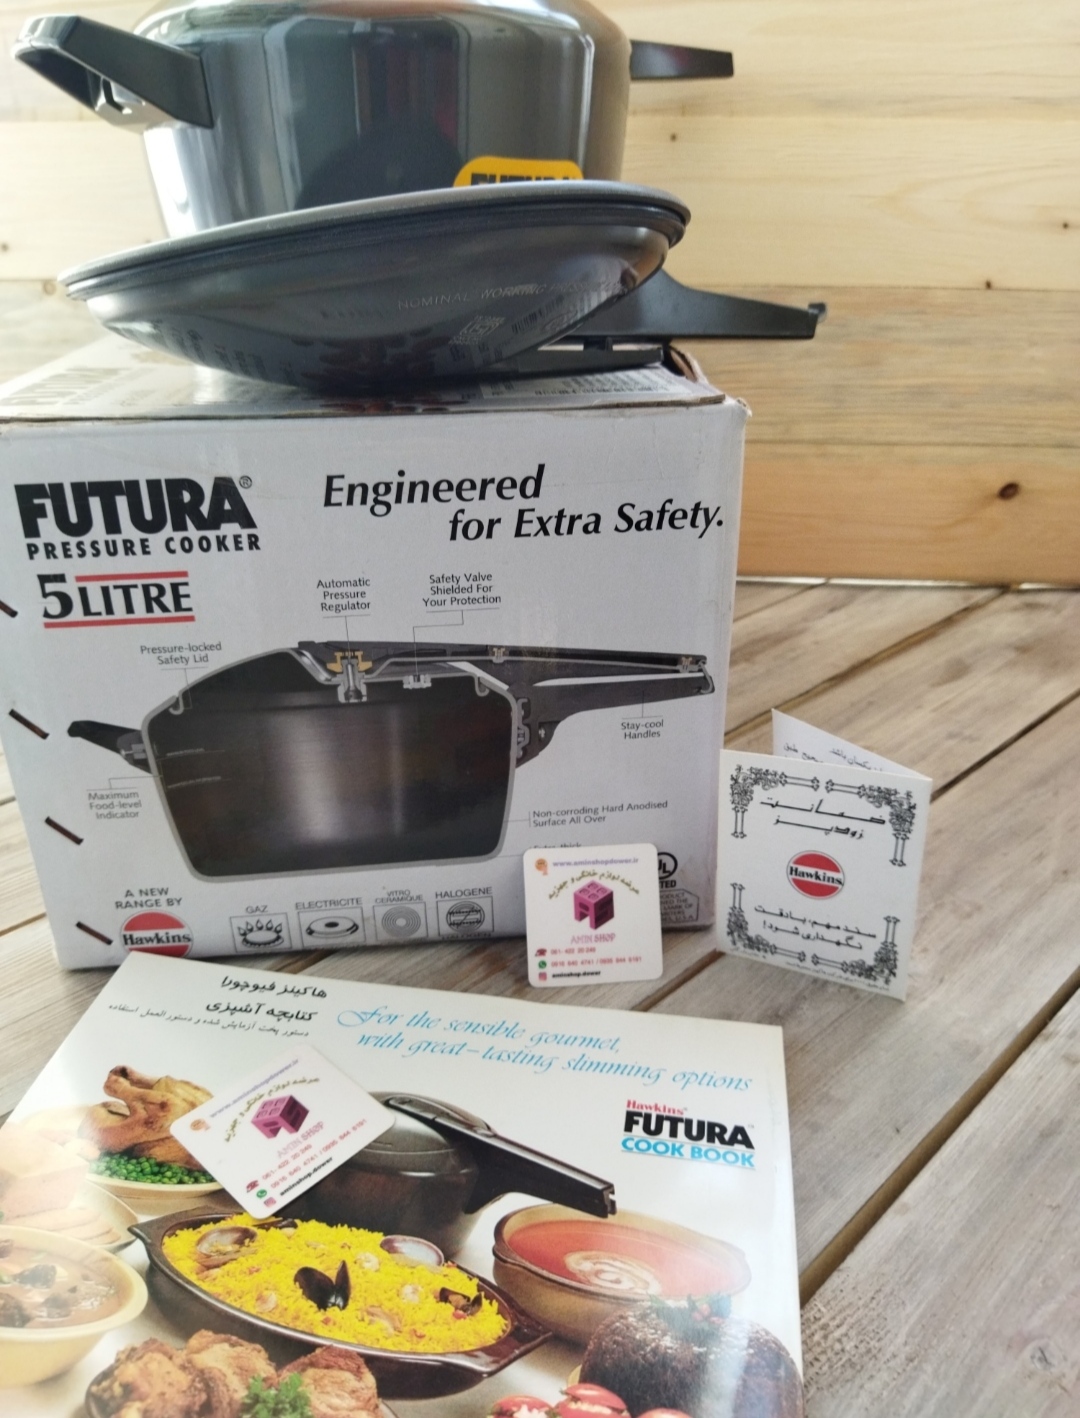  Futura pressure cooker 4liter